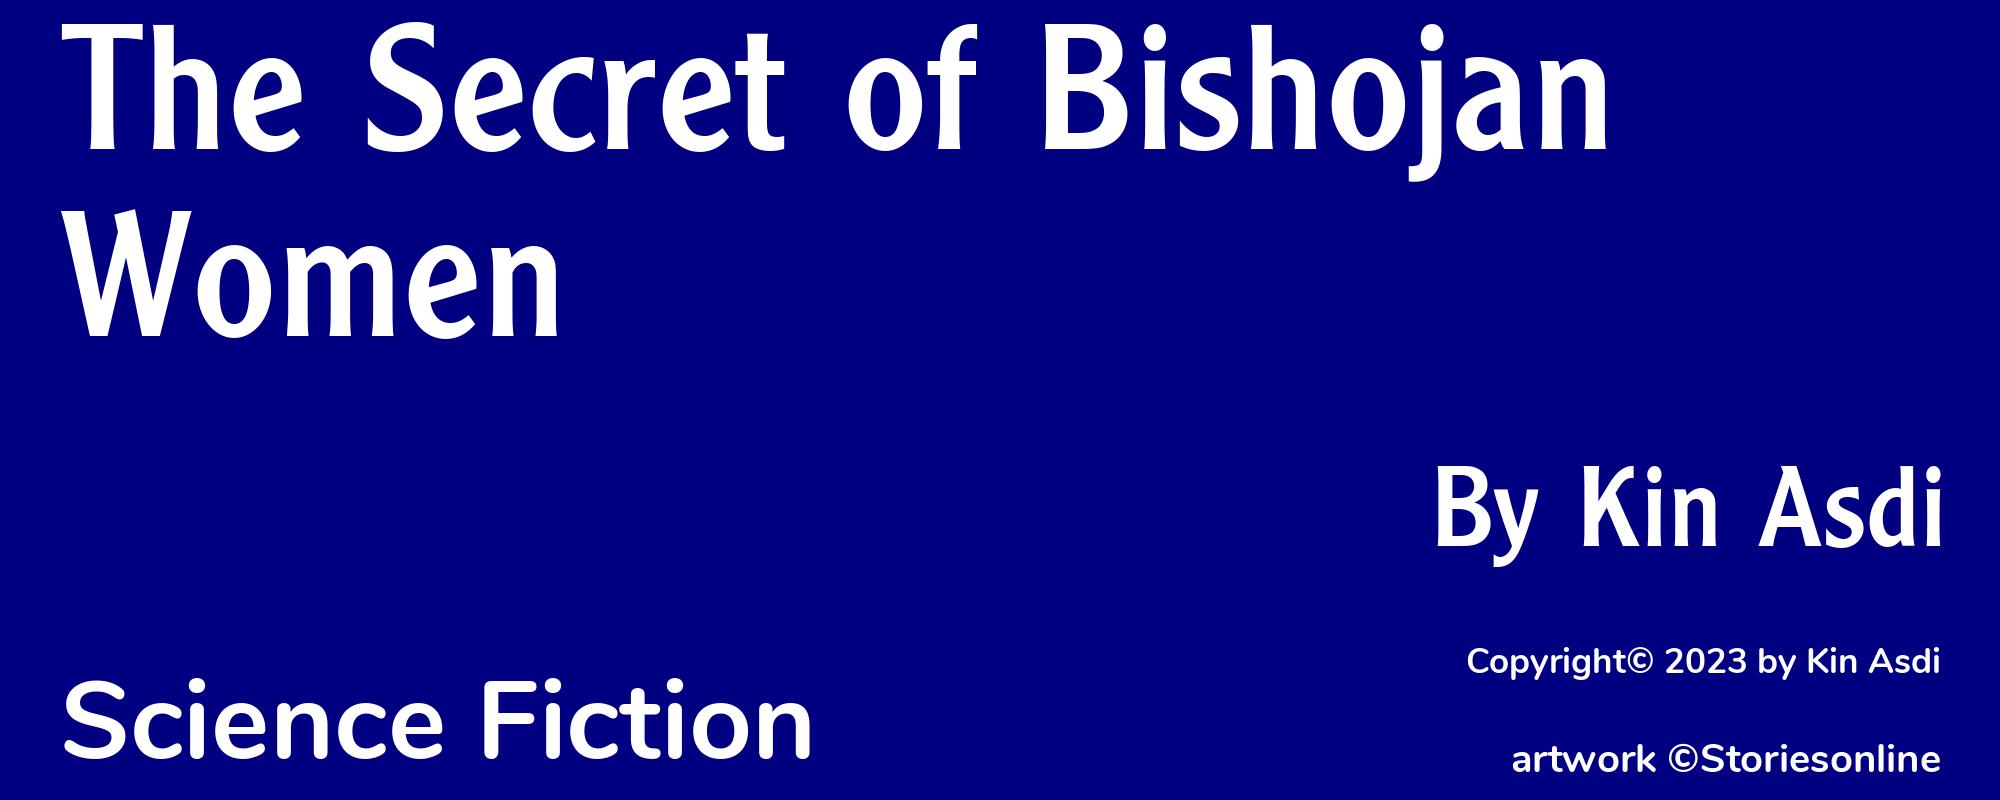 The Secret of Bishojan Women - Cover